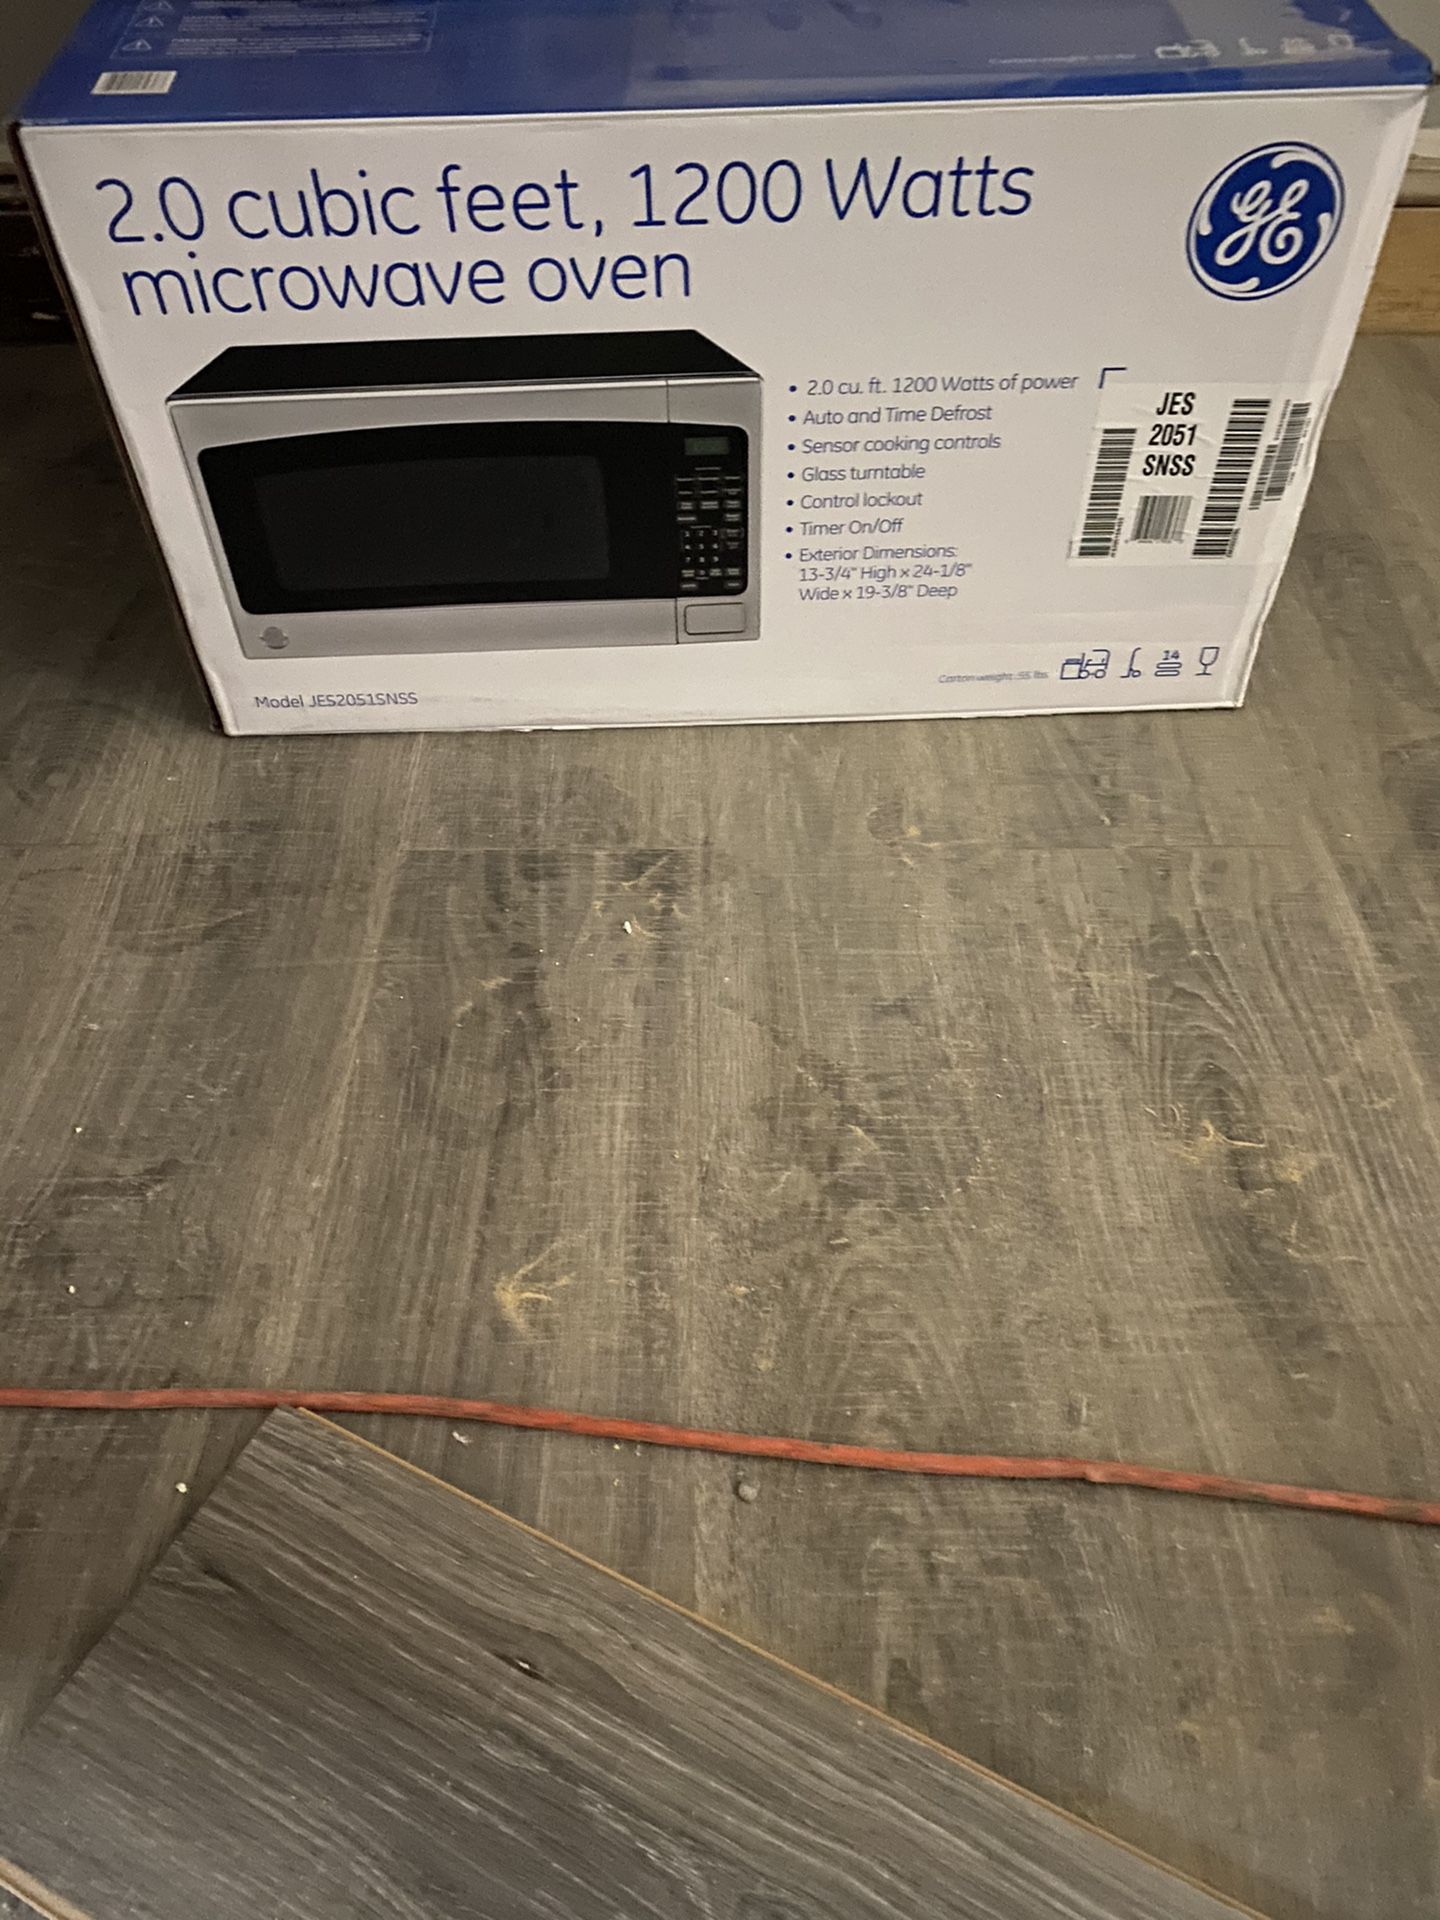 Brand new GE microwave